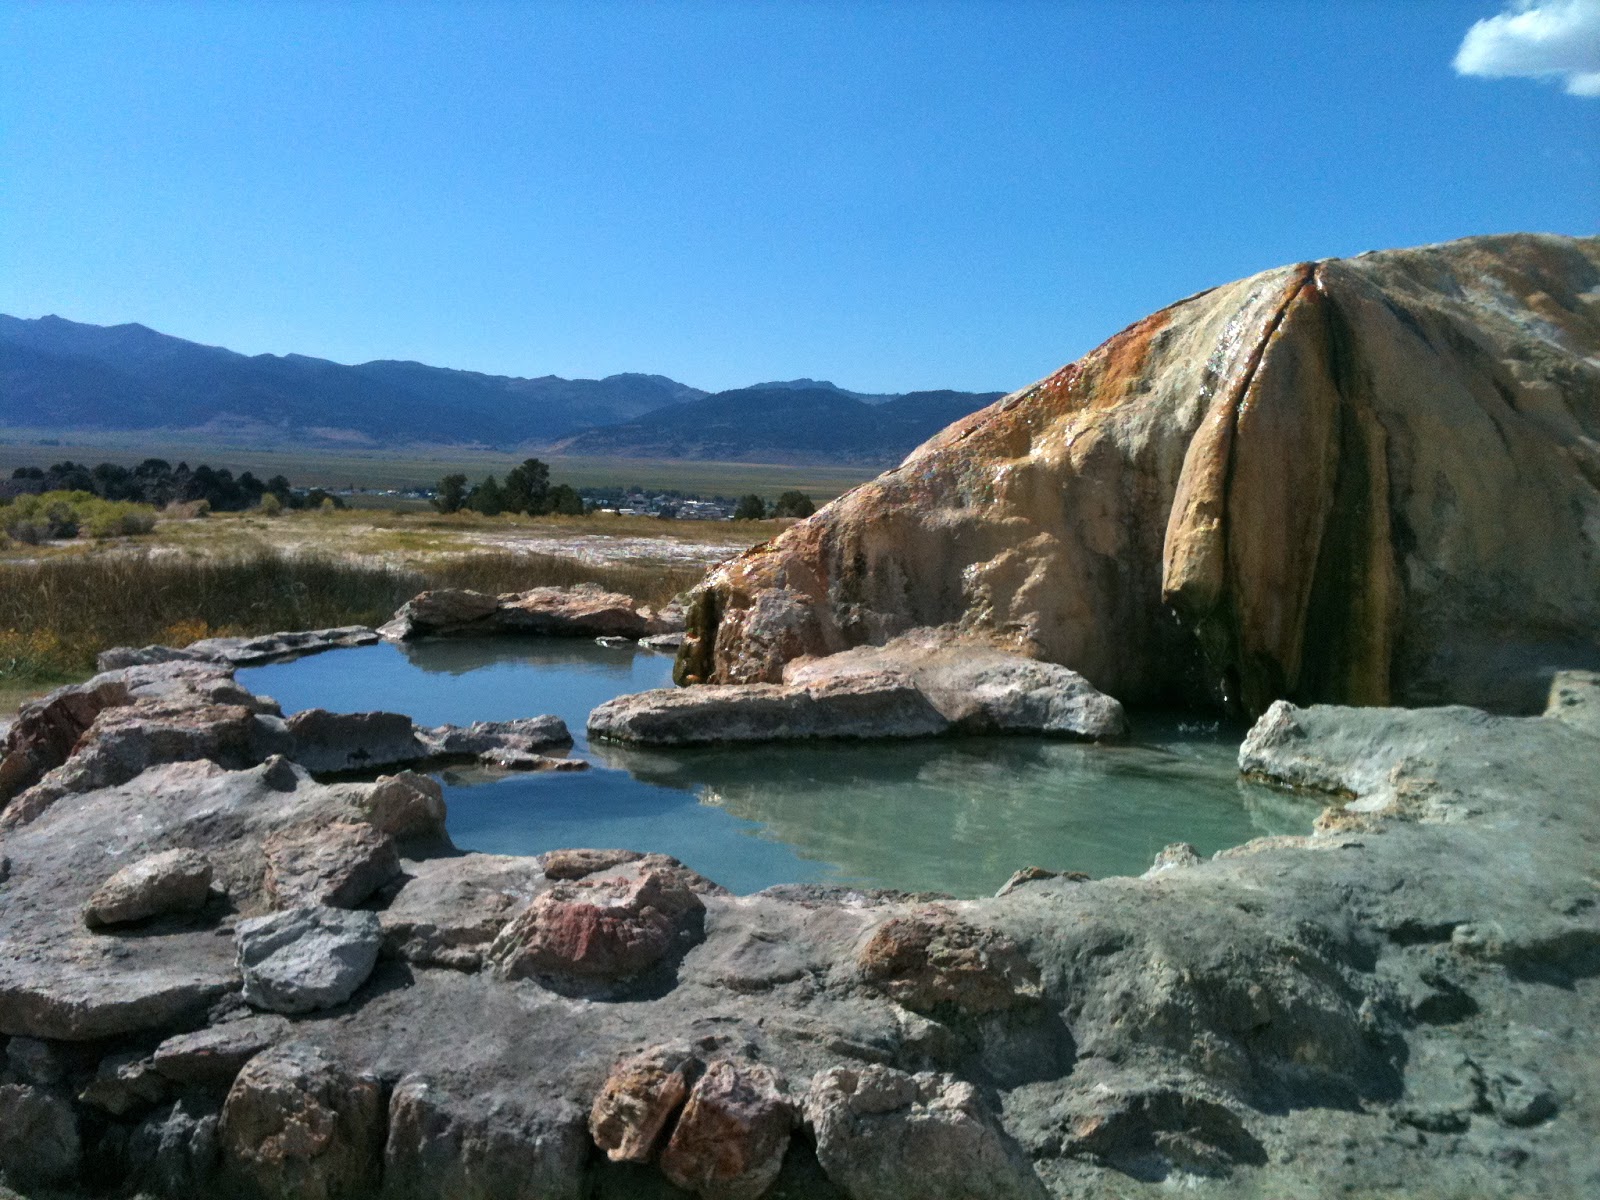 Eastern Sierra hot springs are fun to explore.